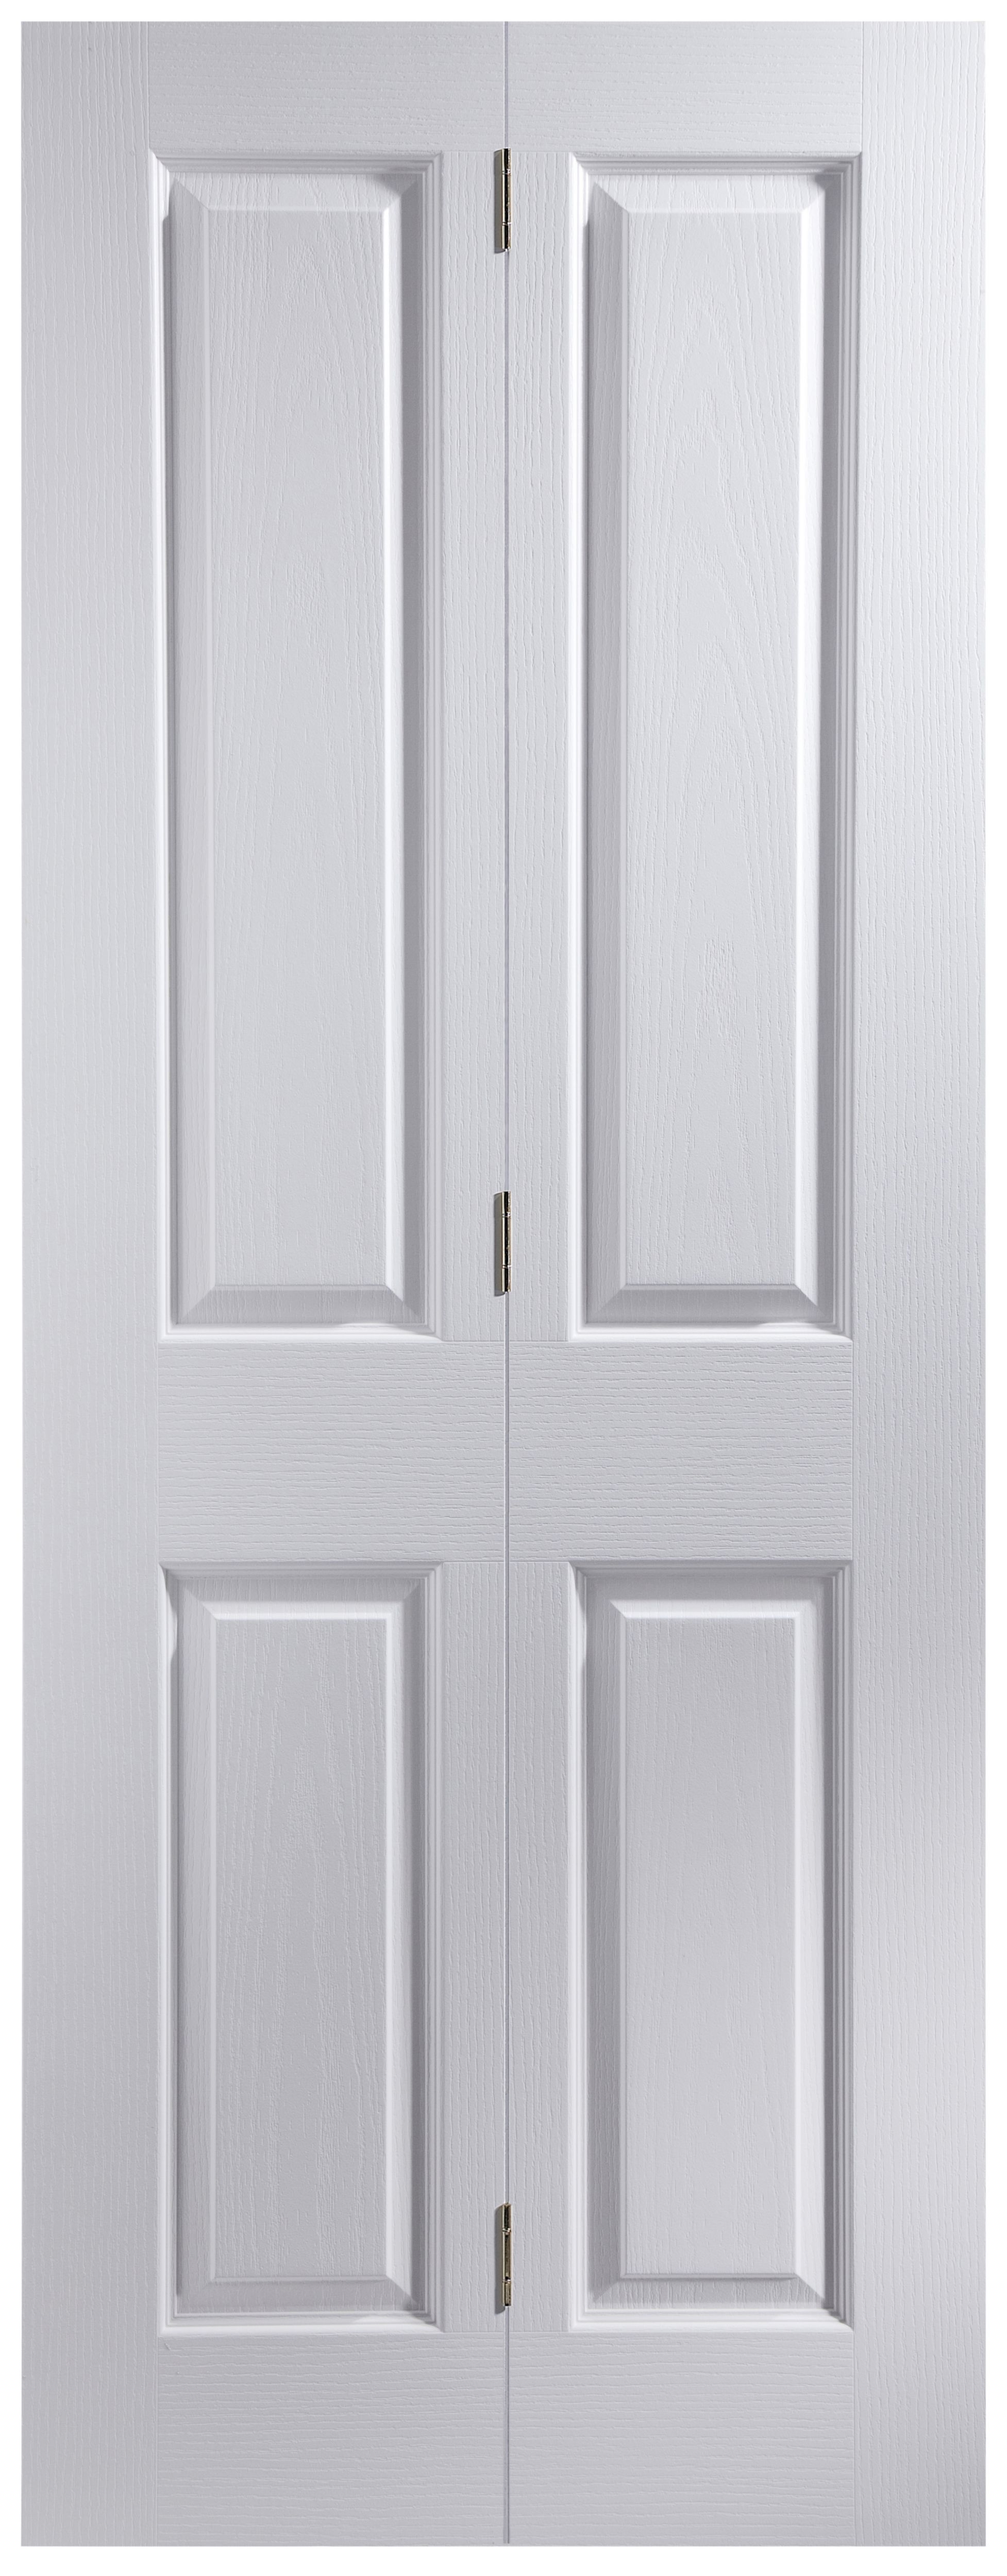 4 panel Unglazed Contemporary White Woodgrain effect Internal Bi-fold Door set, (H)1950mm (W)826mm